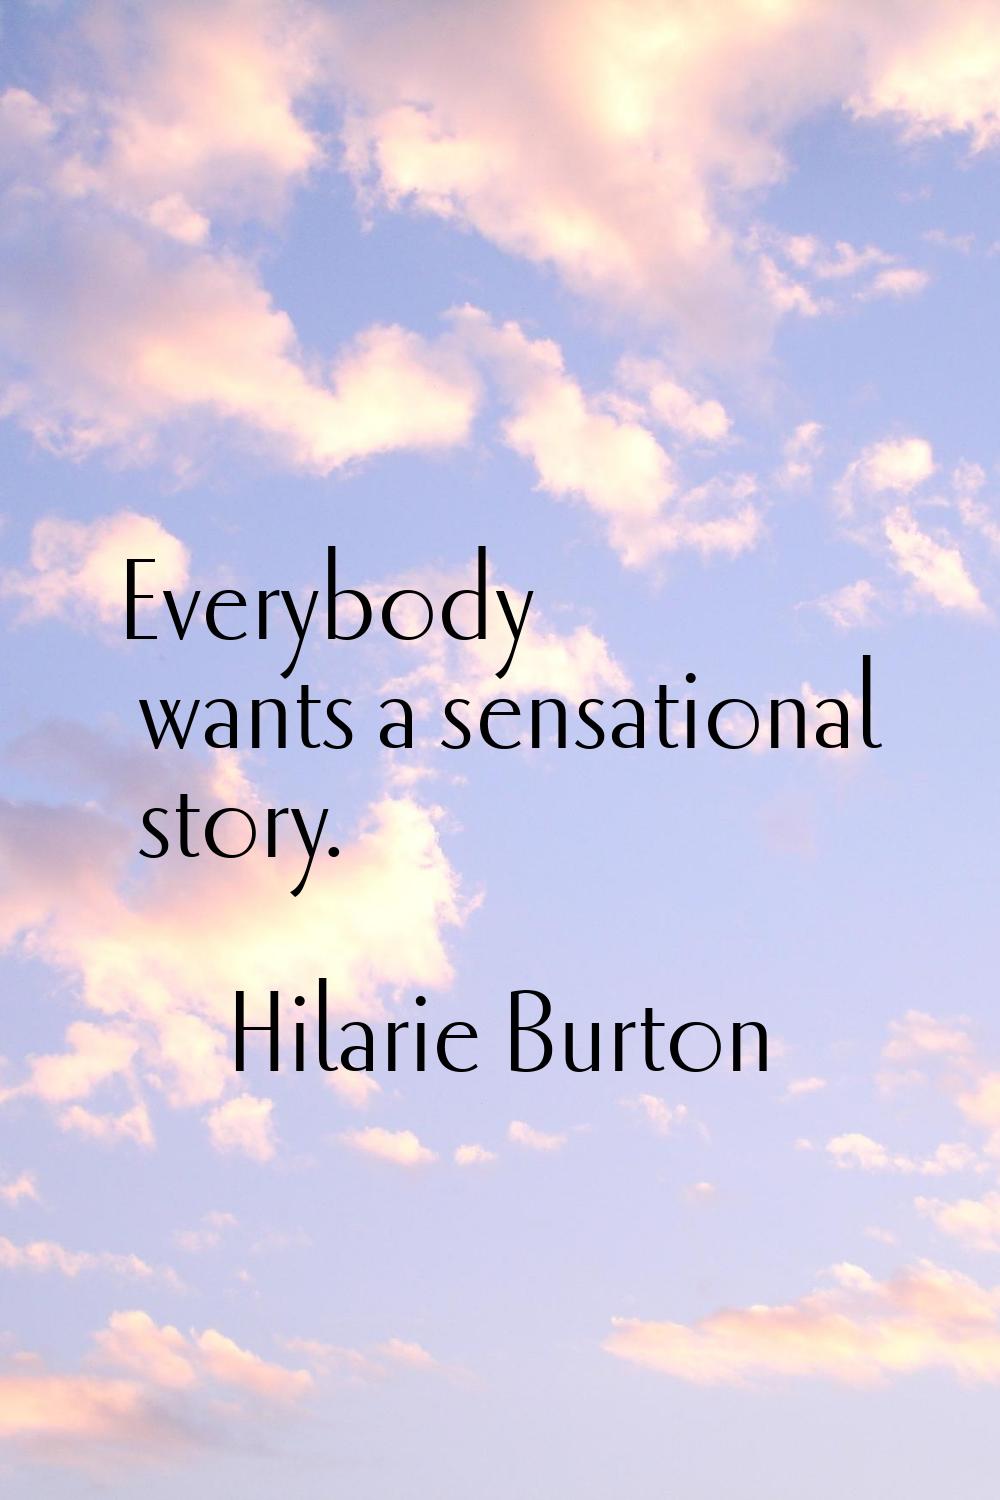 Everybody wants a sensational story.